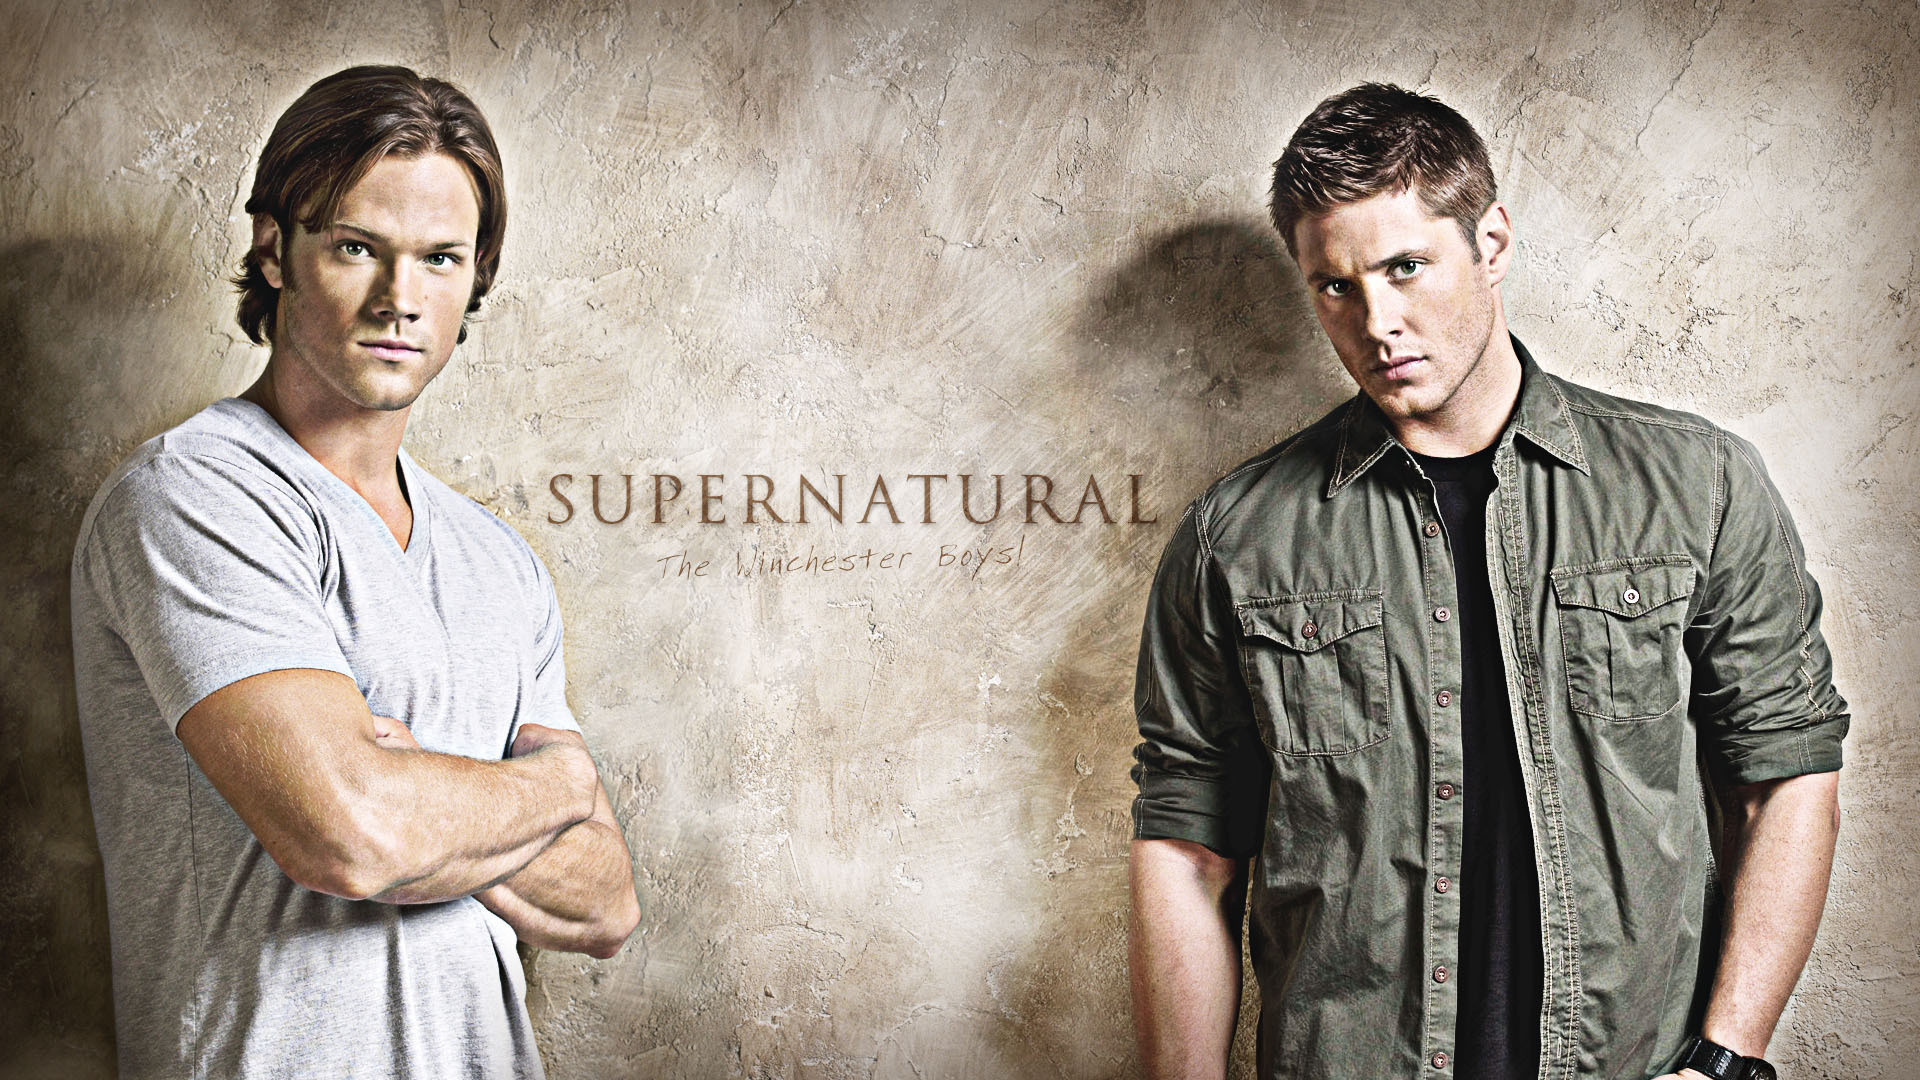 1920x1080 Sam and Dean - Supernatural Wallpaper (26072234) - Fanpop